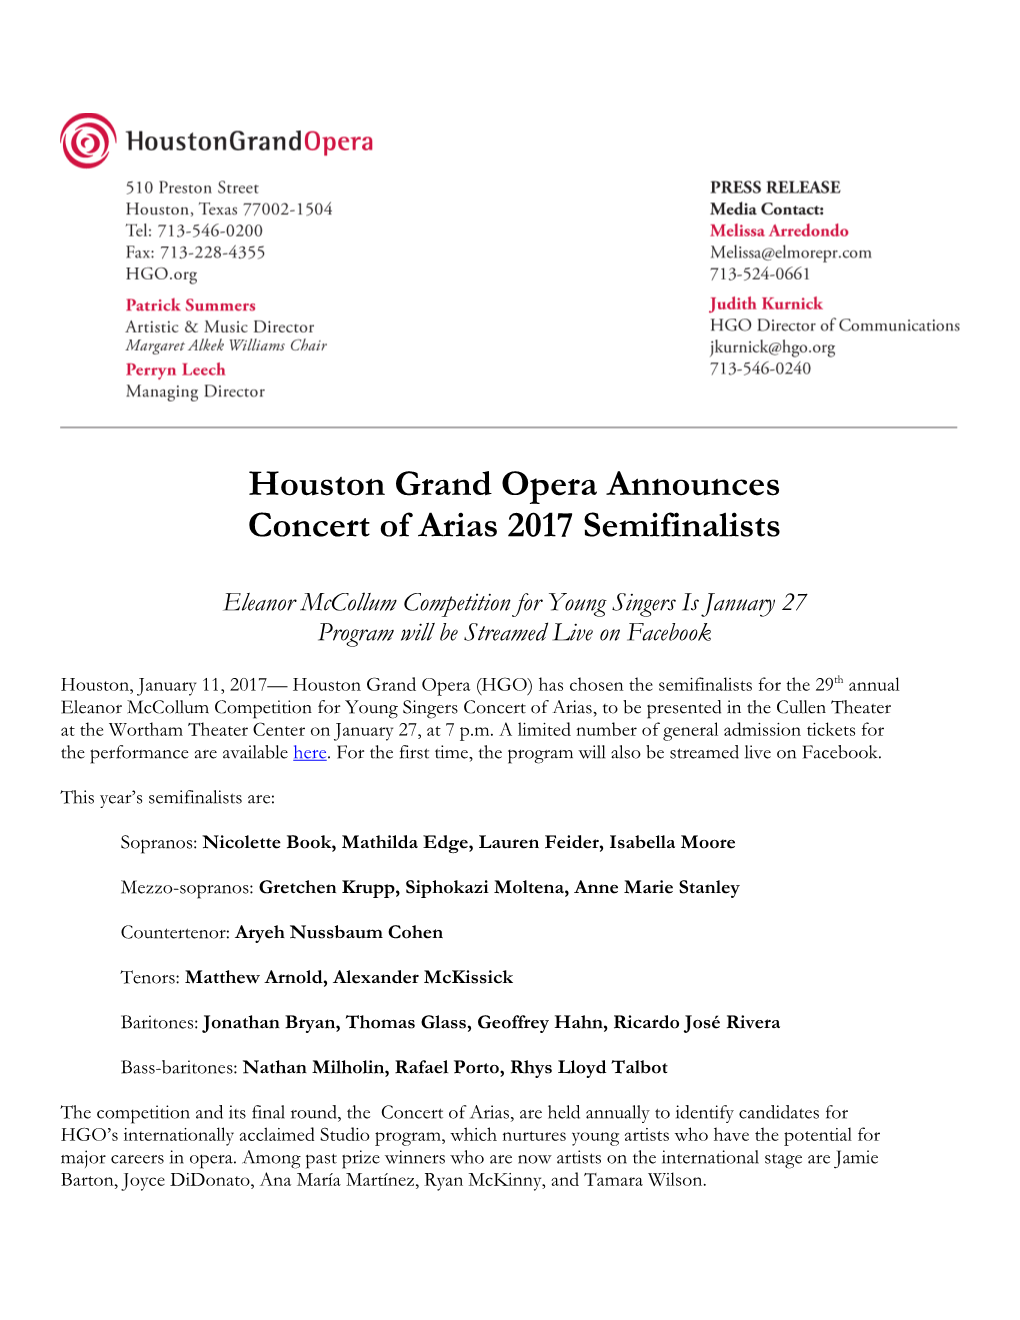 Houston Grand Opera Announces Concert of Arias 2017 Semifinalists